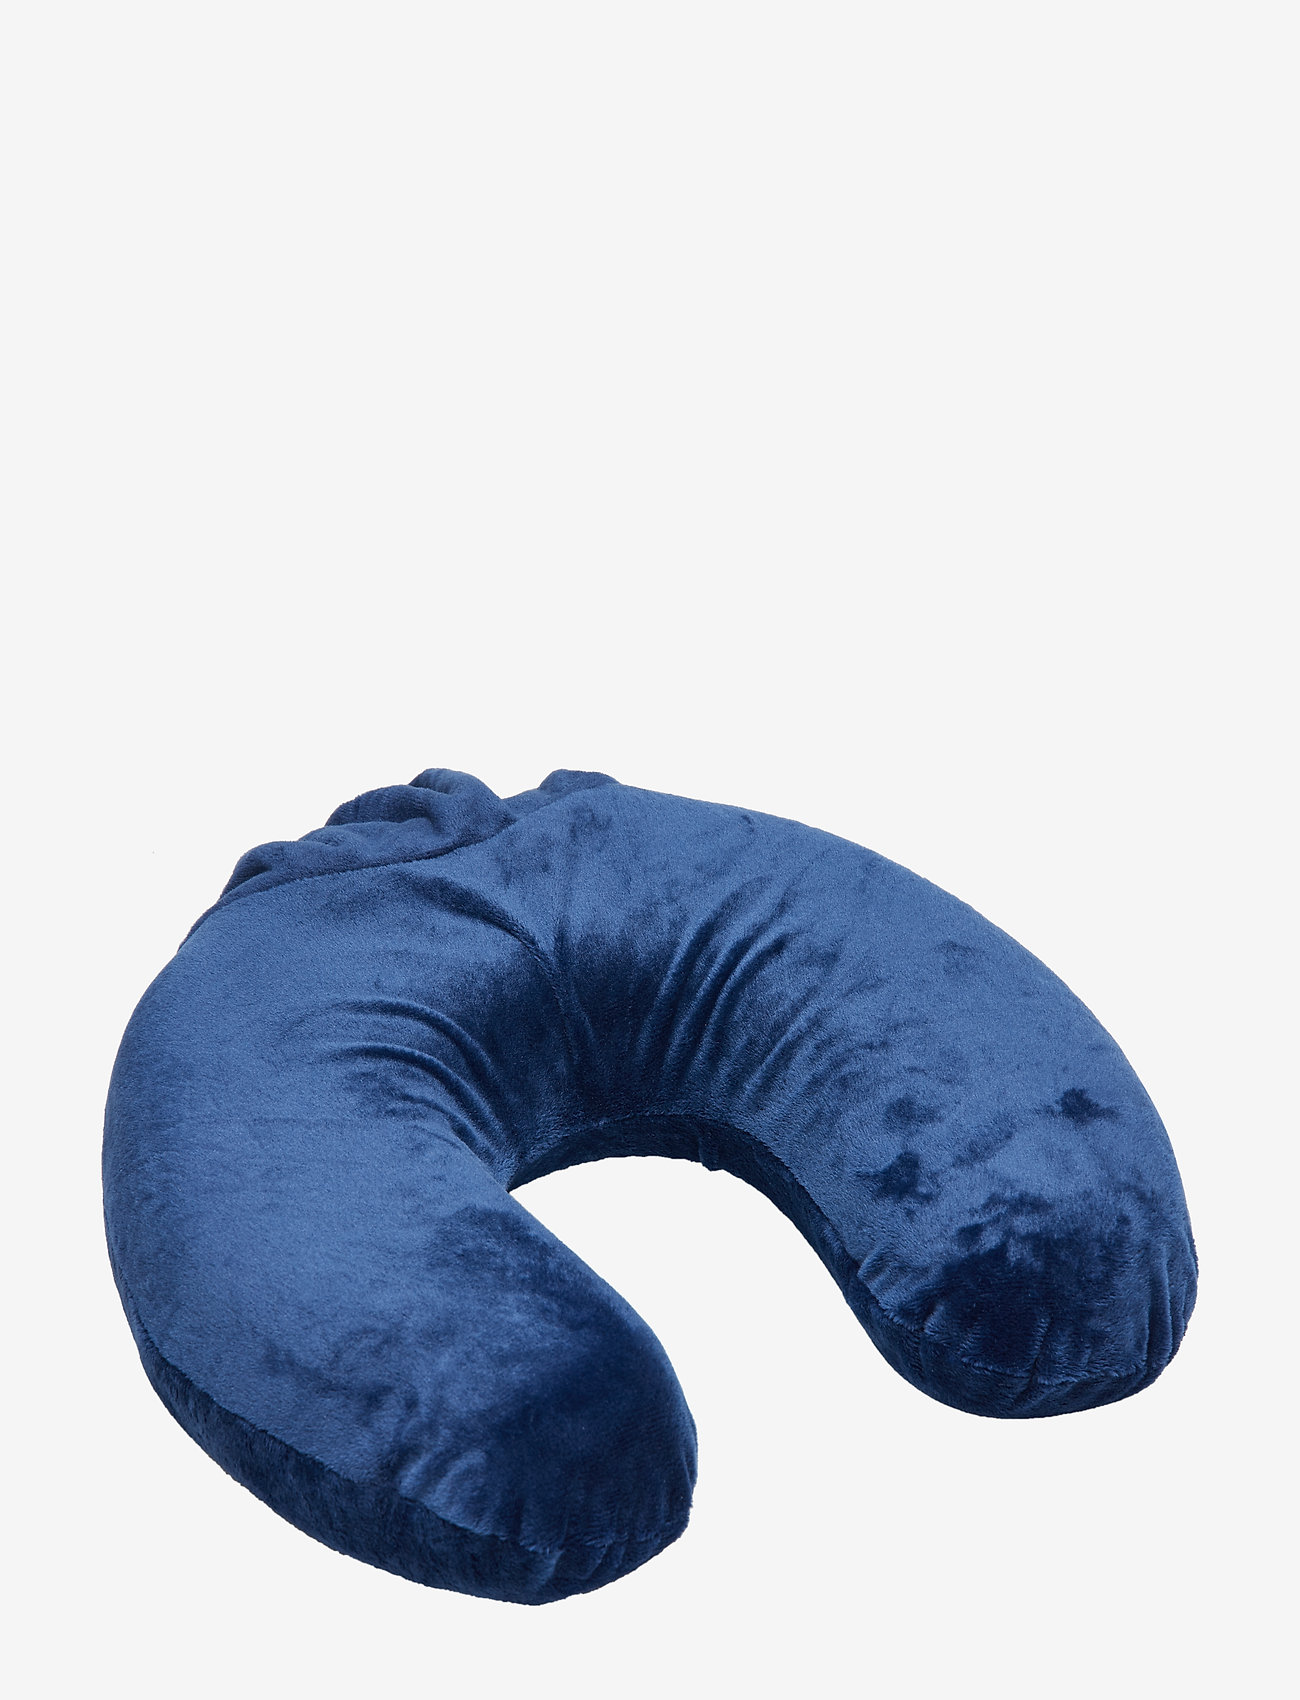 Samsonite - Comfort Travelling Memory Foam Pillow - midnight blue - 0